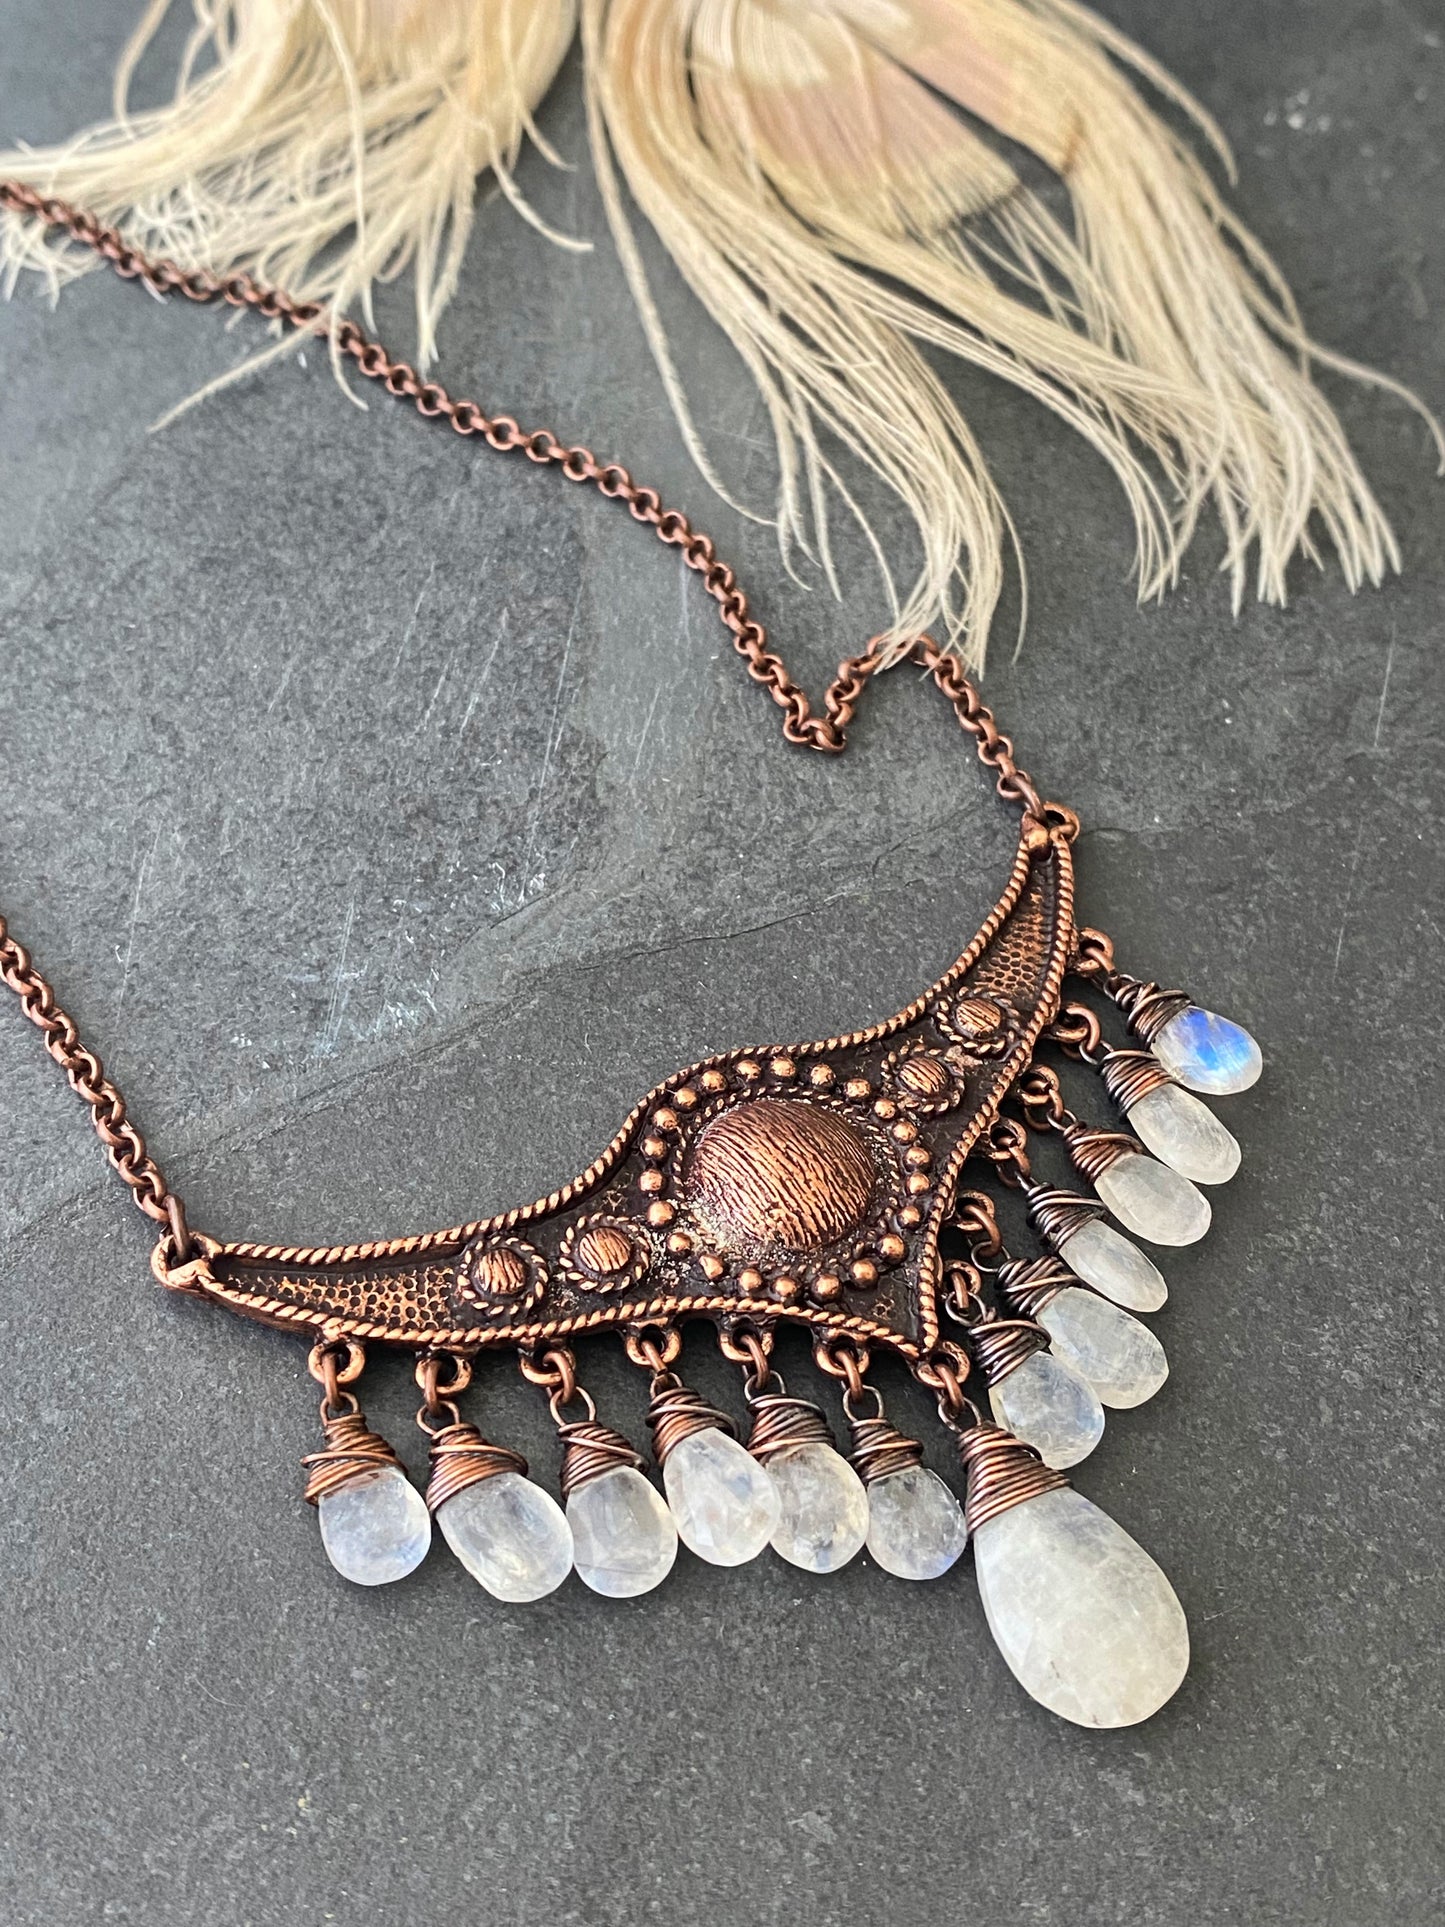 MTO* Moonstone and copper pendant, statement, necklace, jewelry - Andria Bieber Designs 